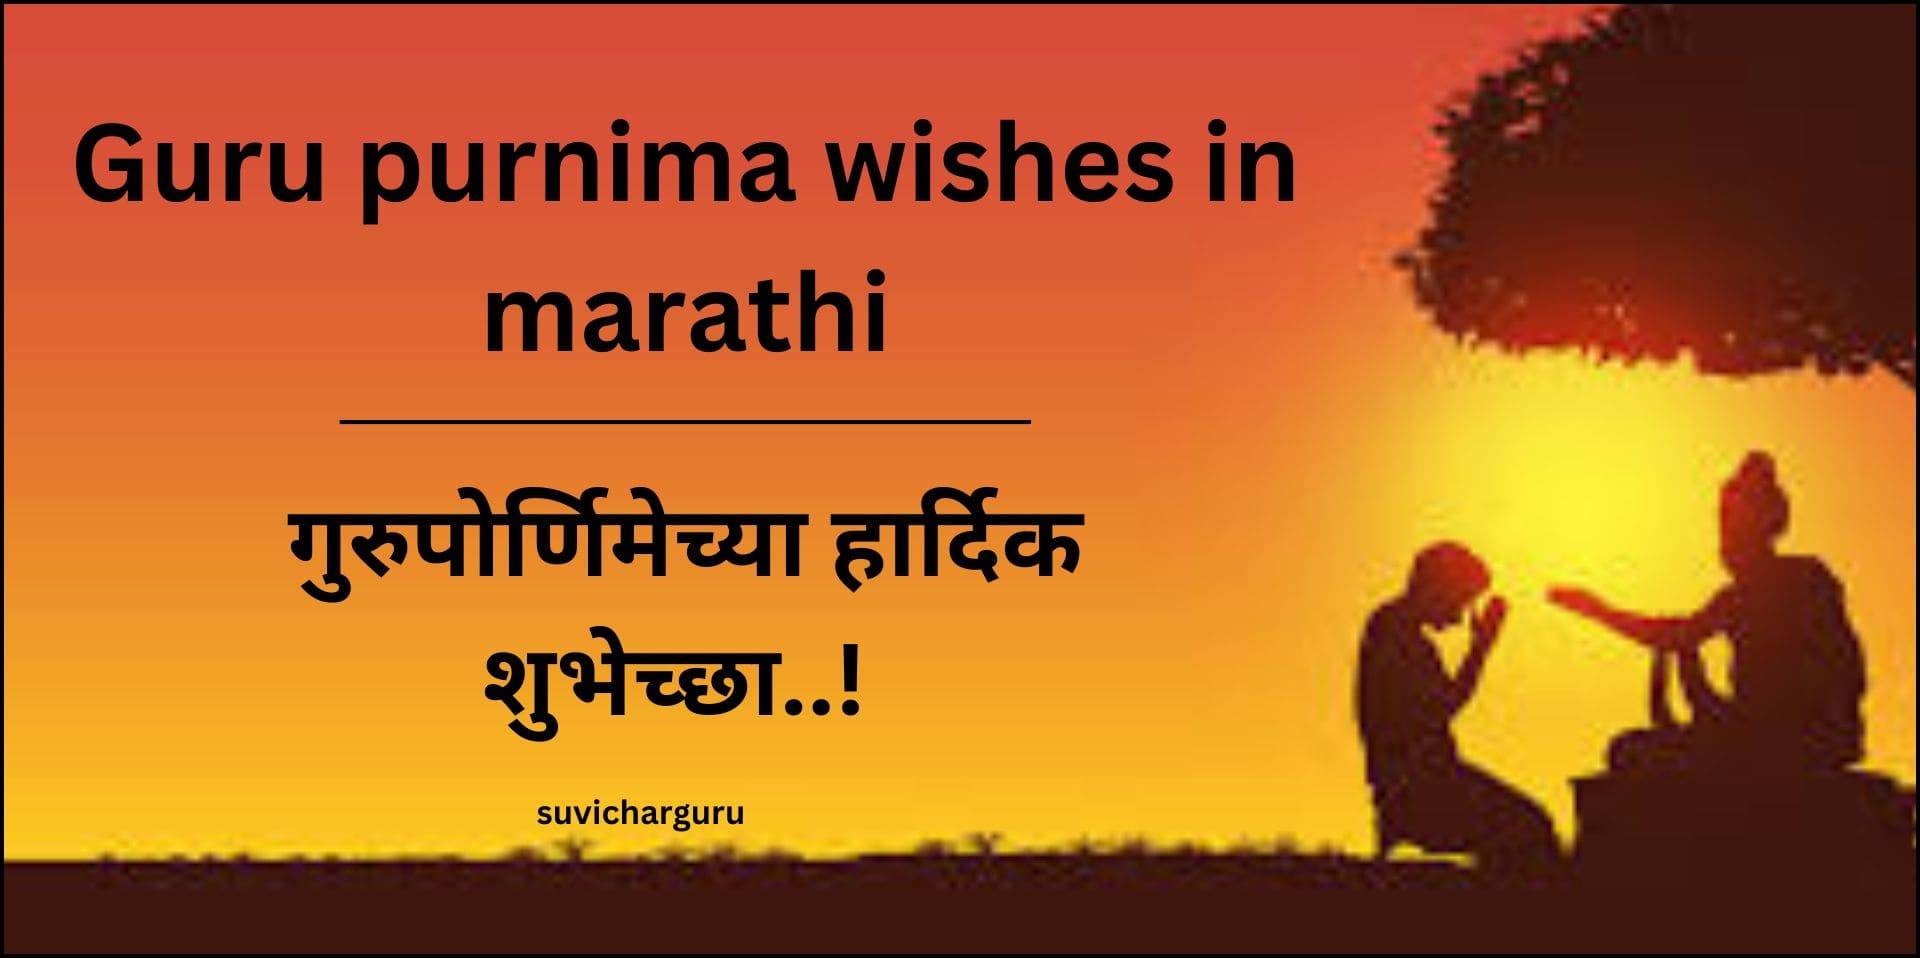 Guru purnima wishes in marathi | गुरुपौर्णिमेच्या हार्दिक शुभेच्छा!